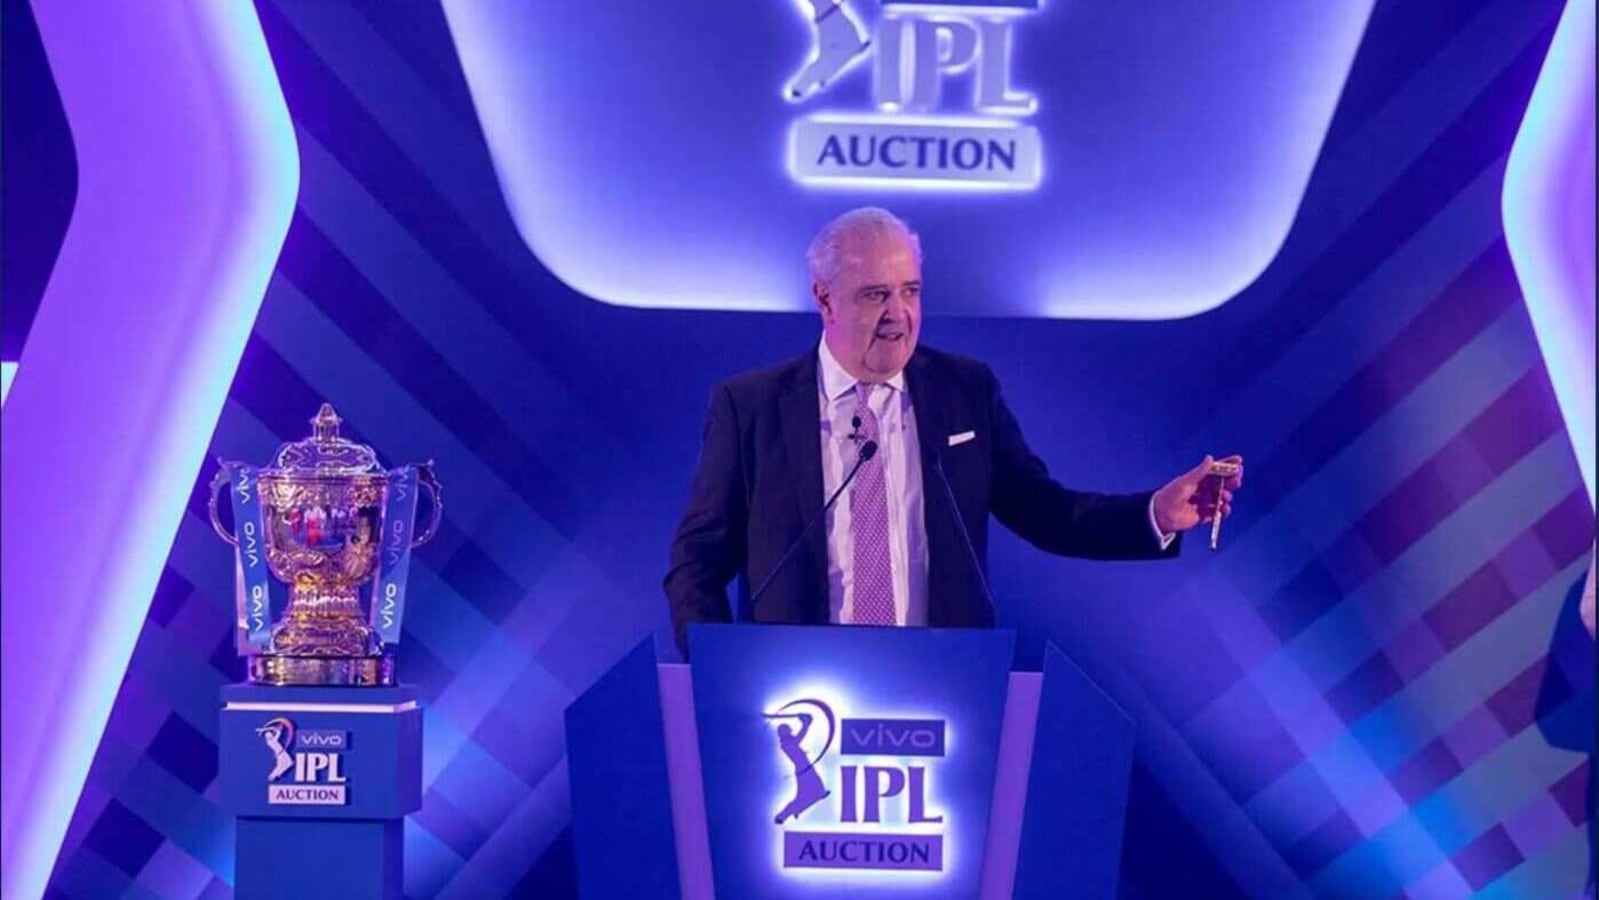 IPL Auction 2021 Highlights: Chris Morris biggest buy at ₹16.25 crore | Hindustan Times